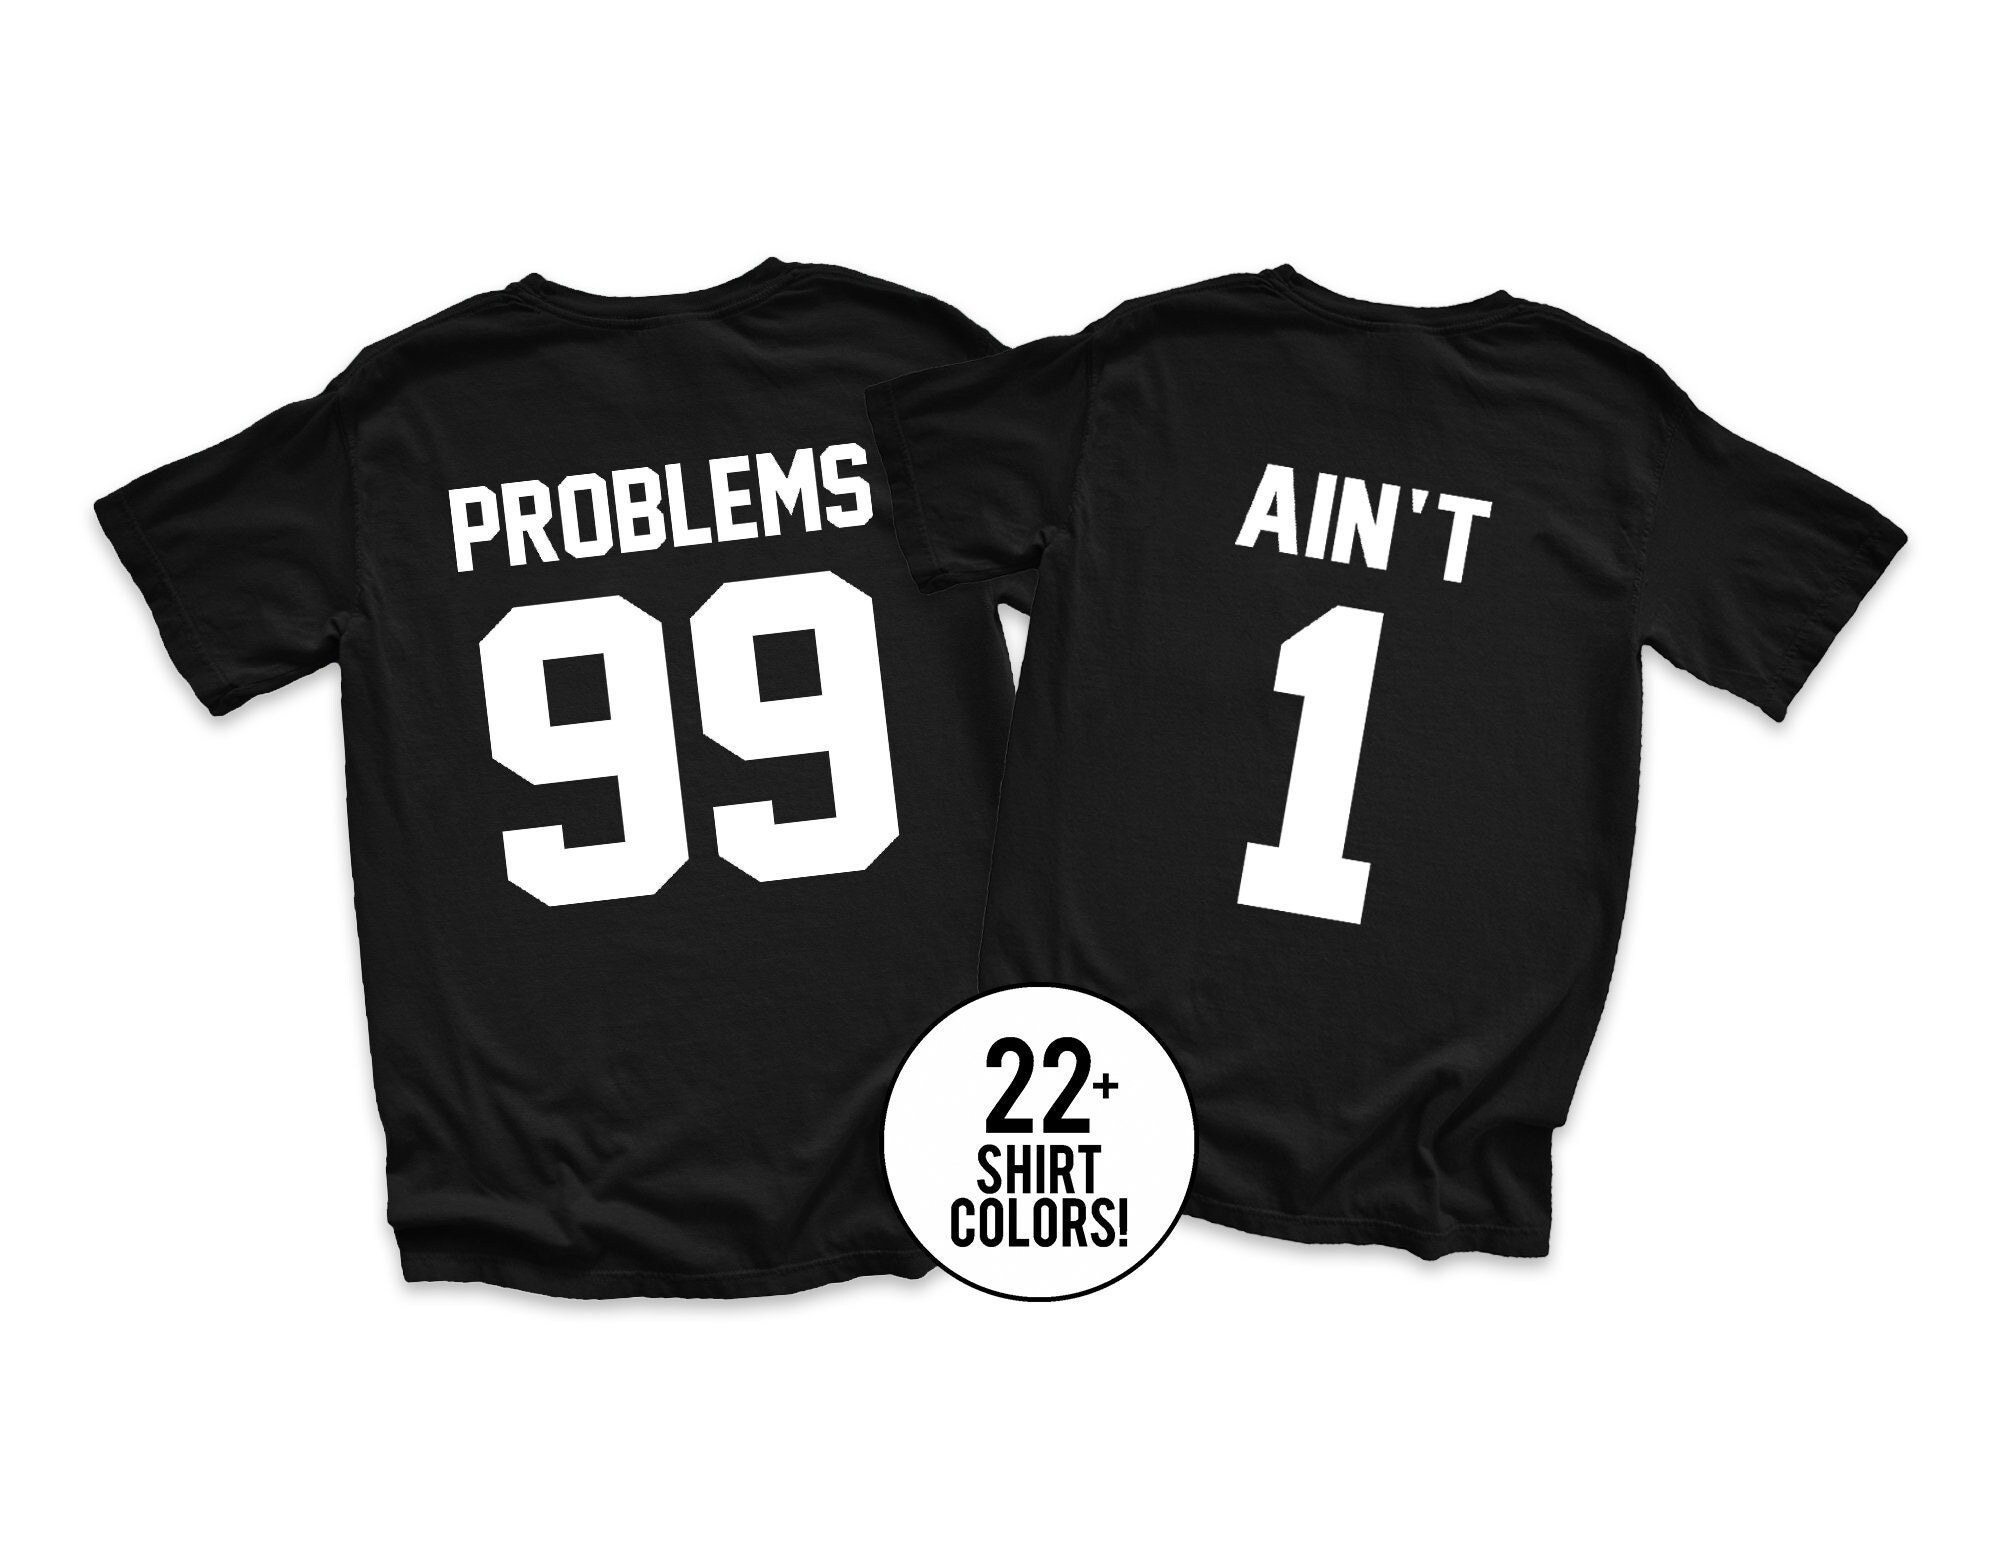 99 Problems футболка. Футболка с номером 99. 99 Problems. Brayden sn99 Shirt. Hugo 99 problems